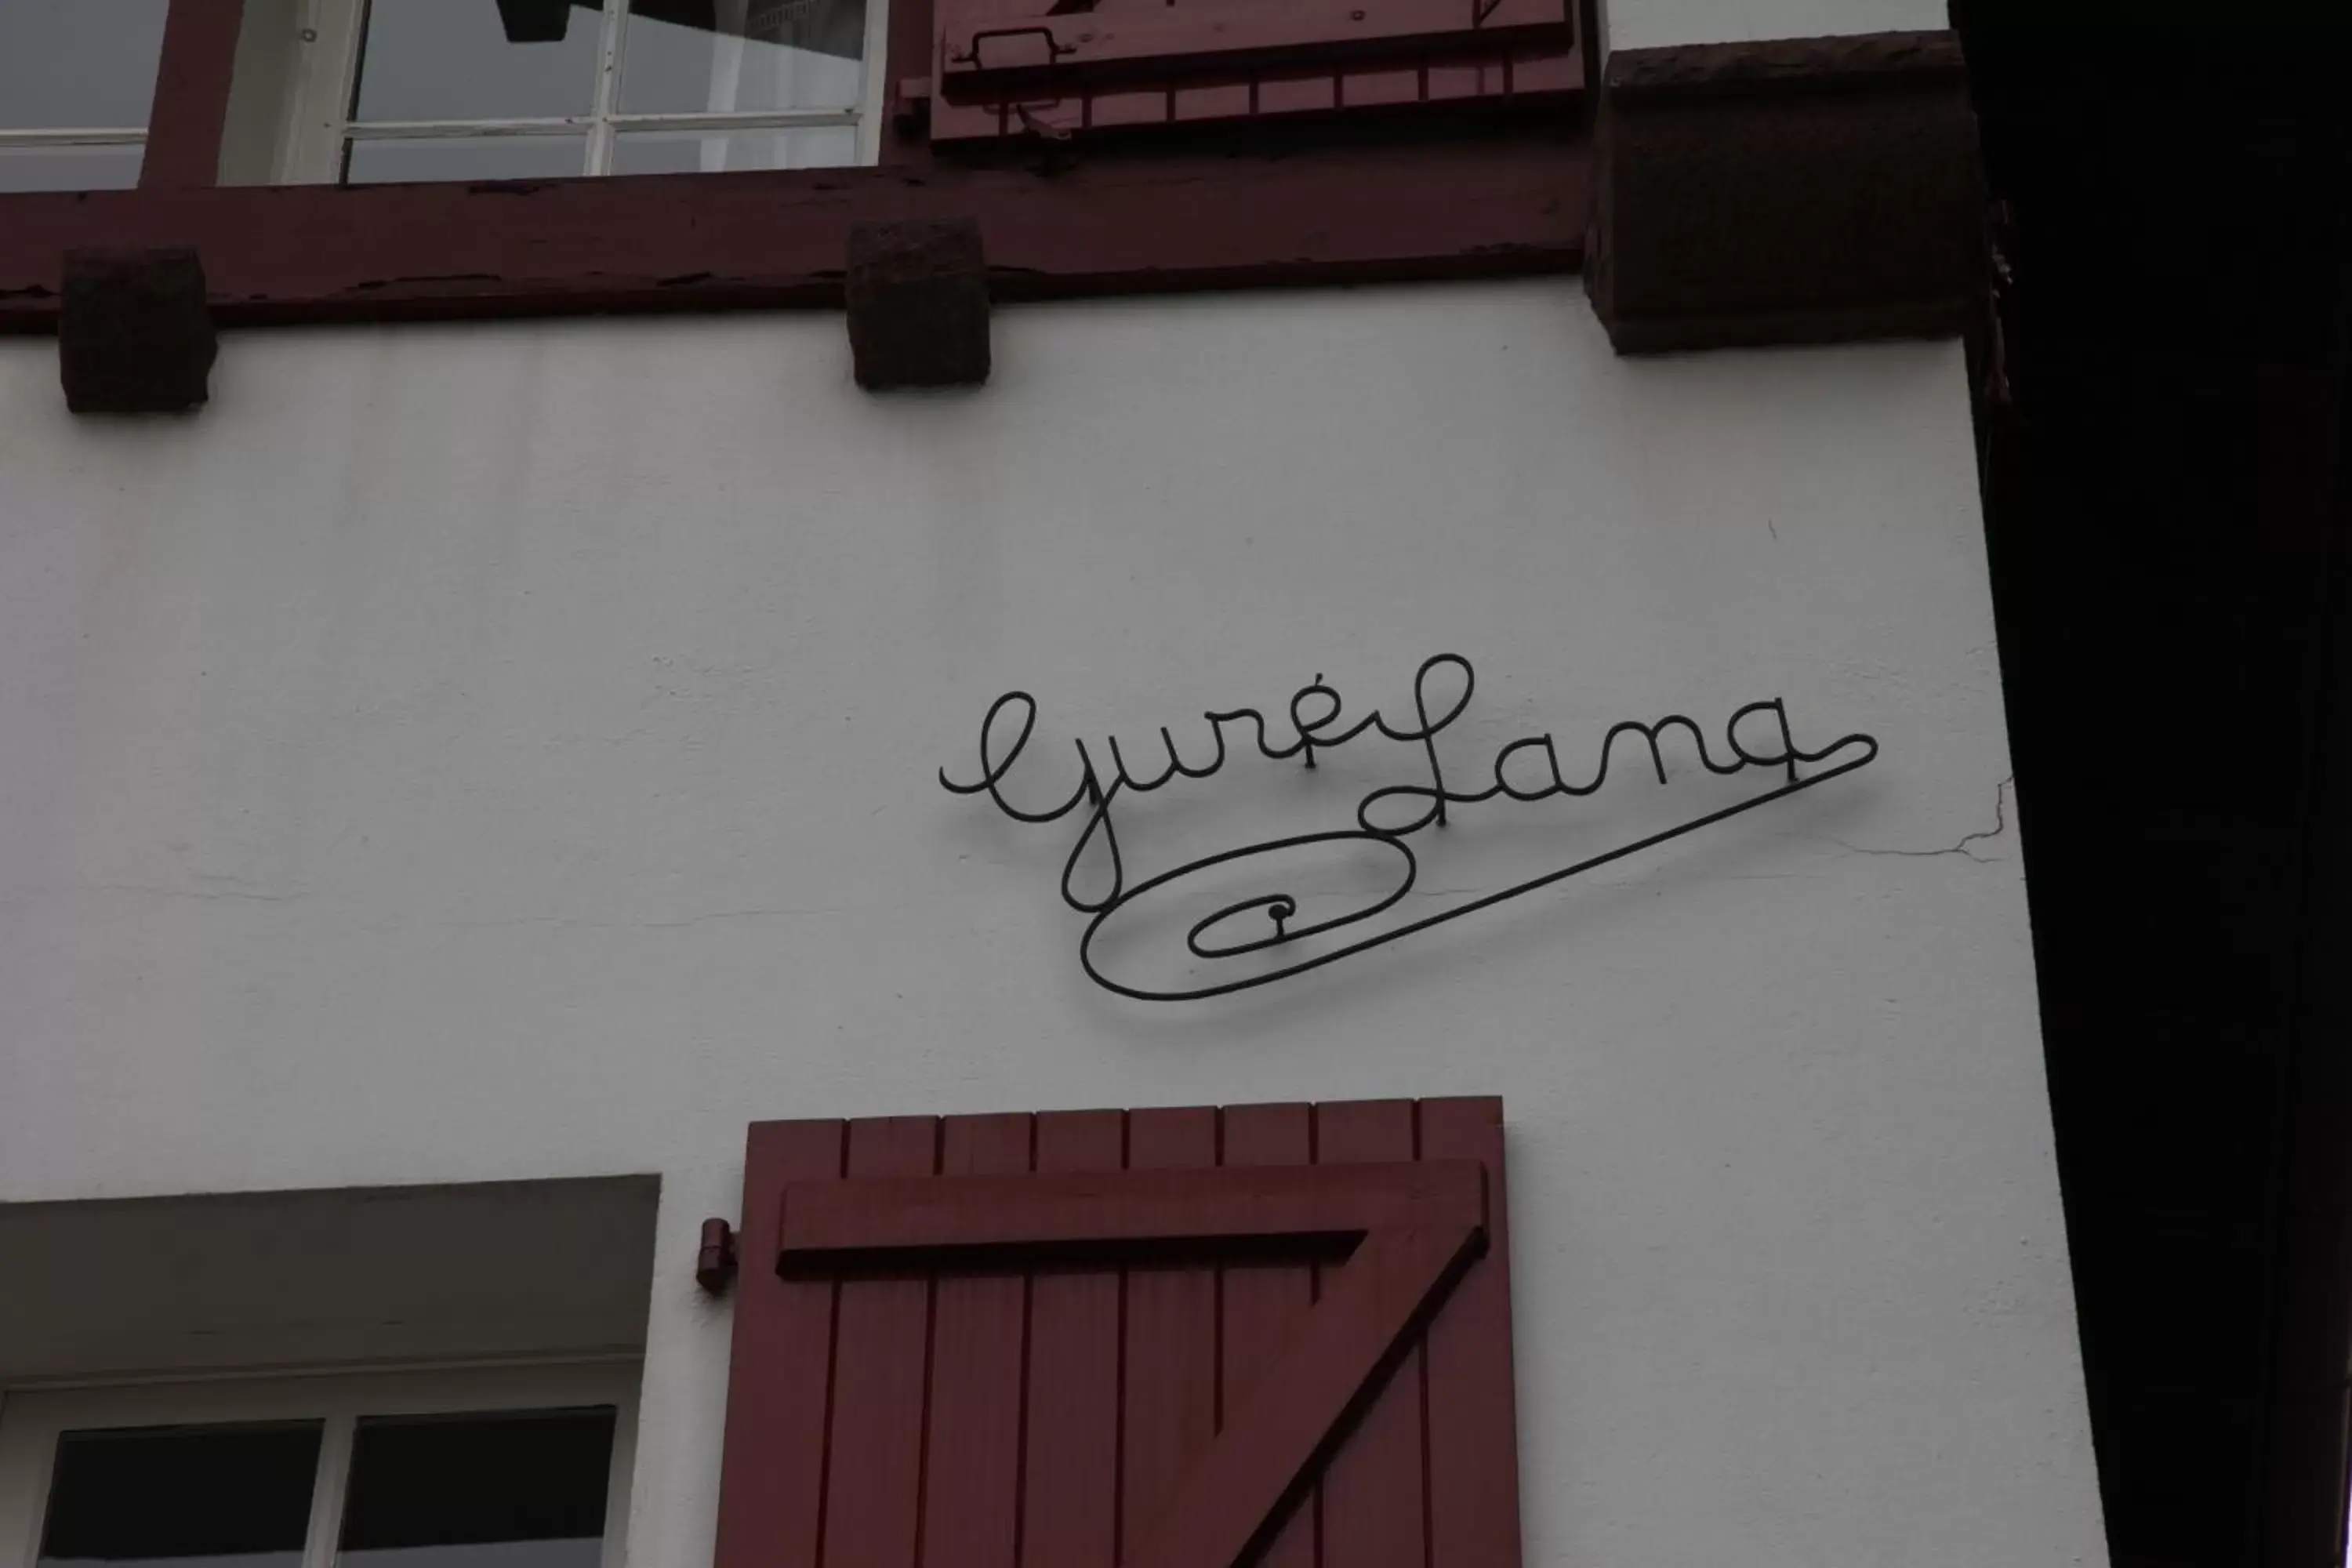 Property logo or sign in Gure Lana